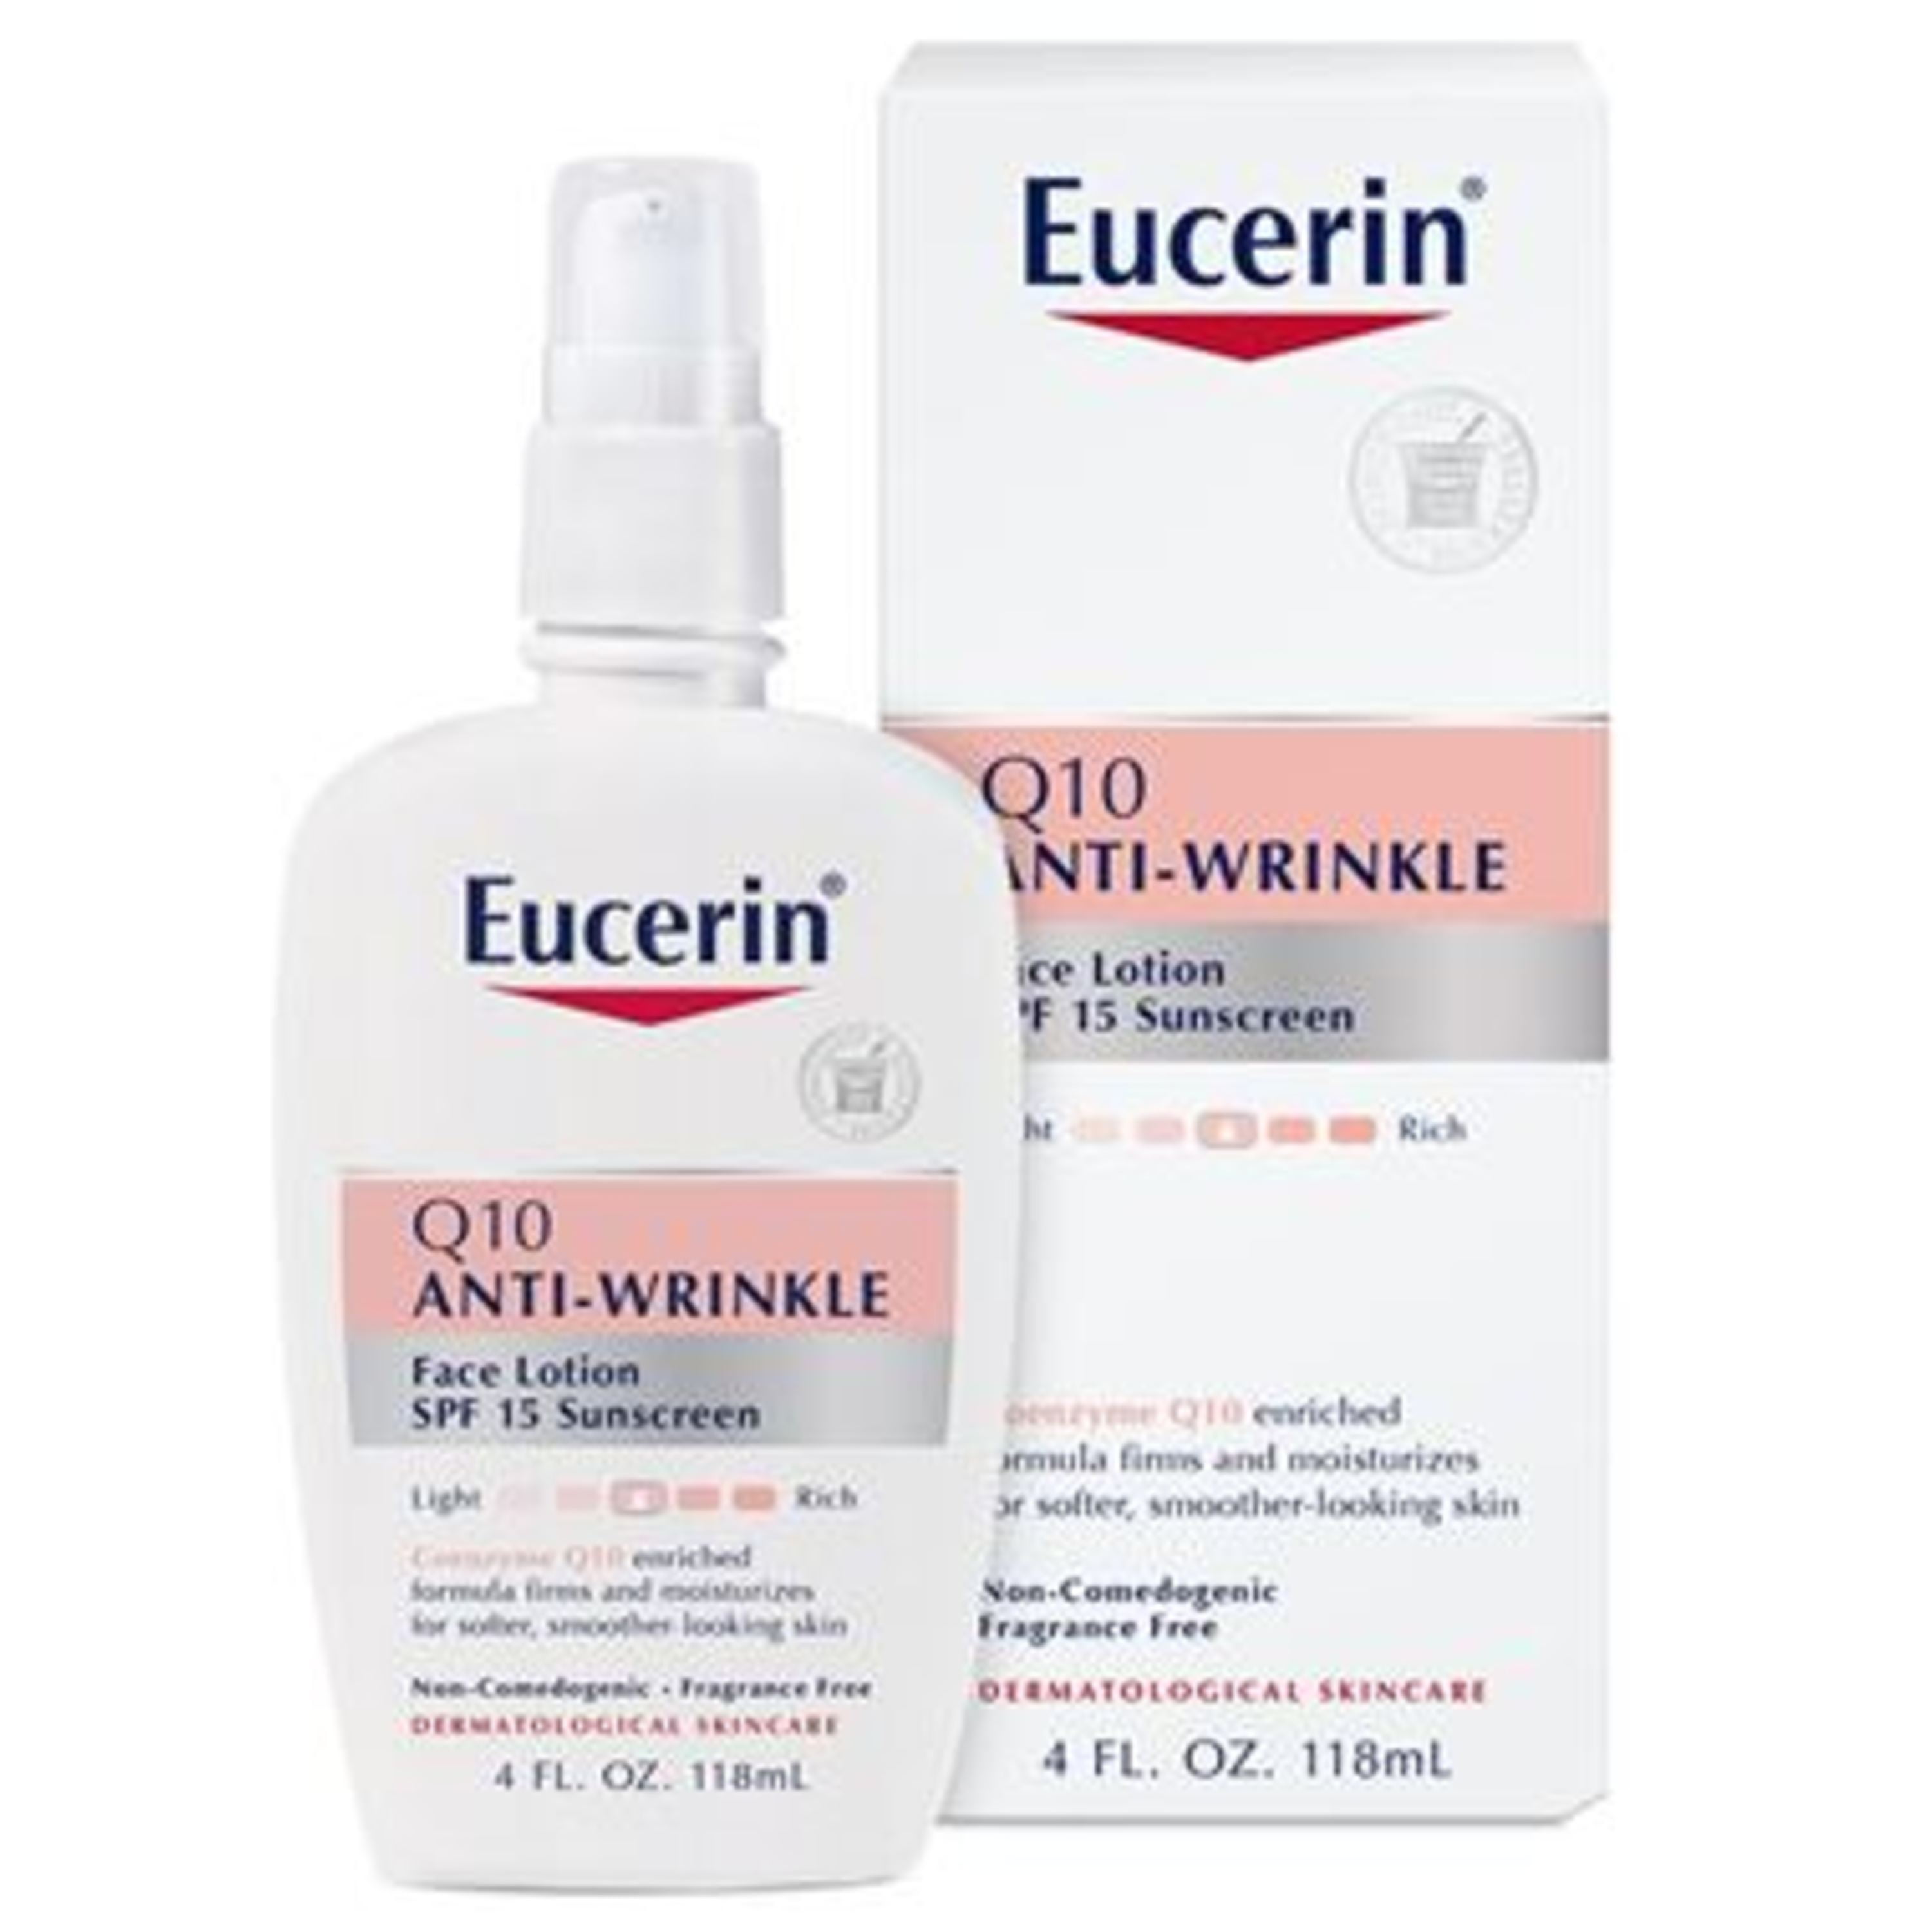 q10 anti wrinkle cream eucerin)